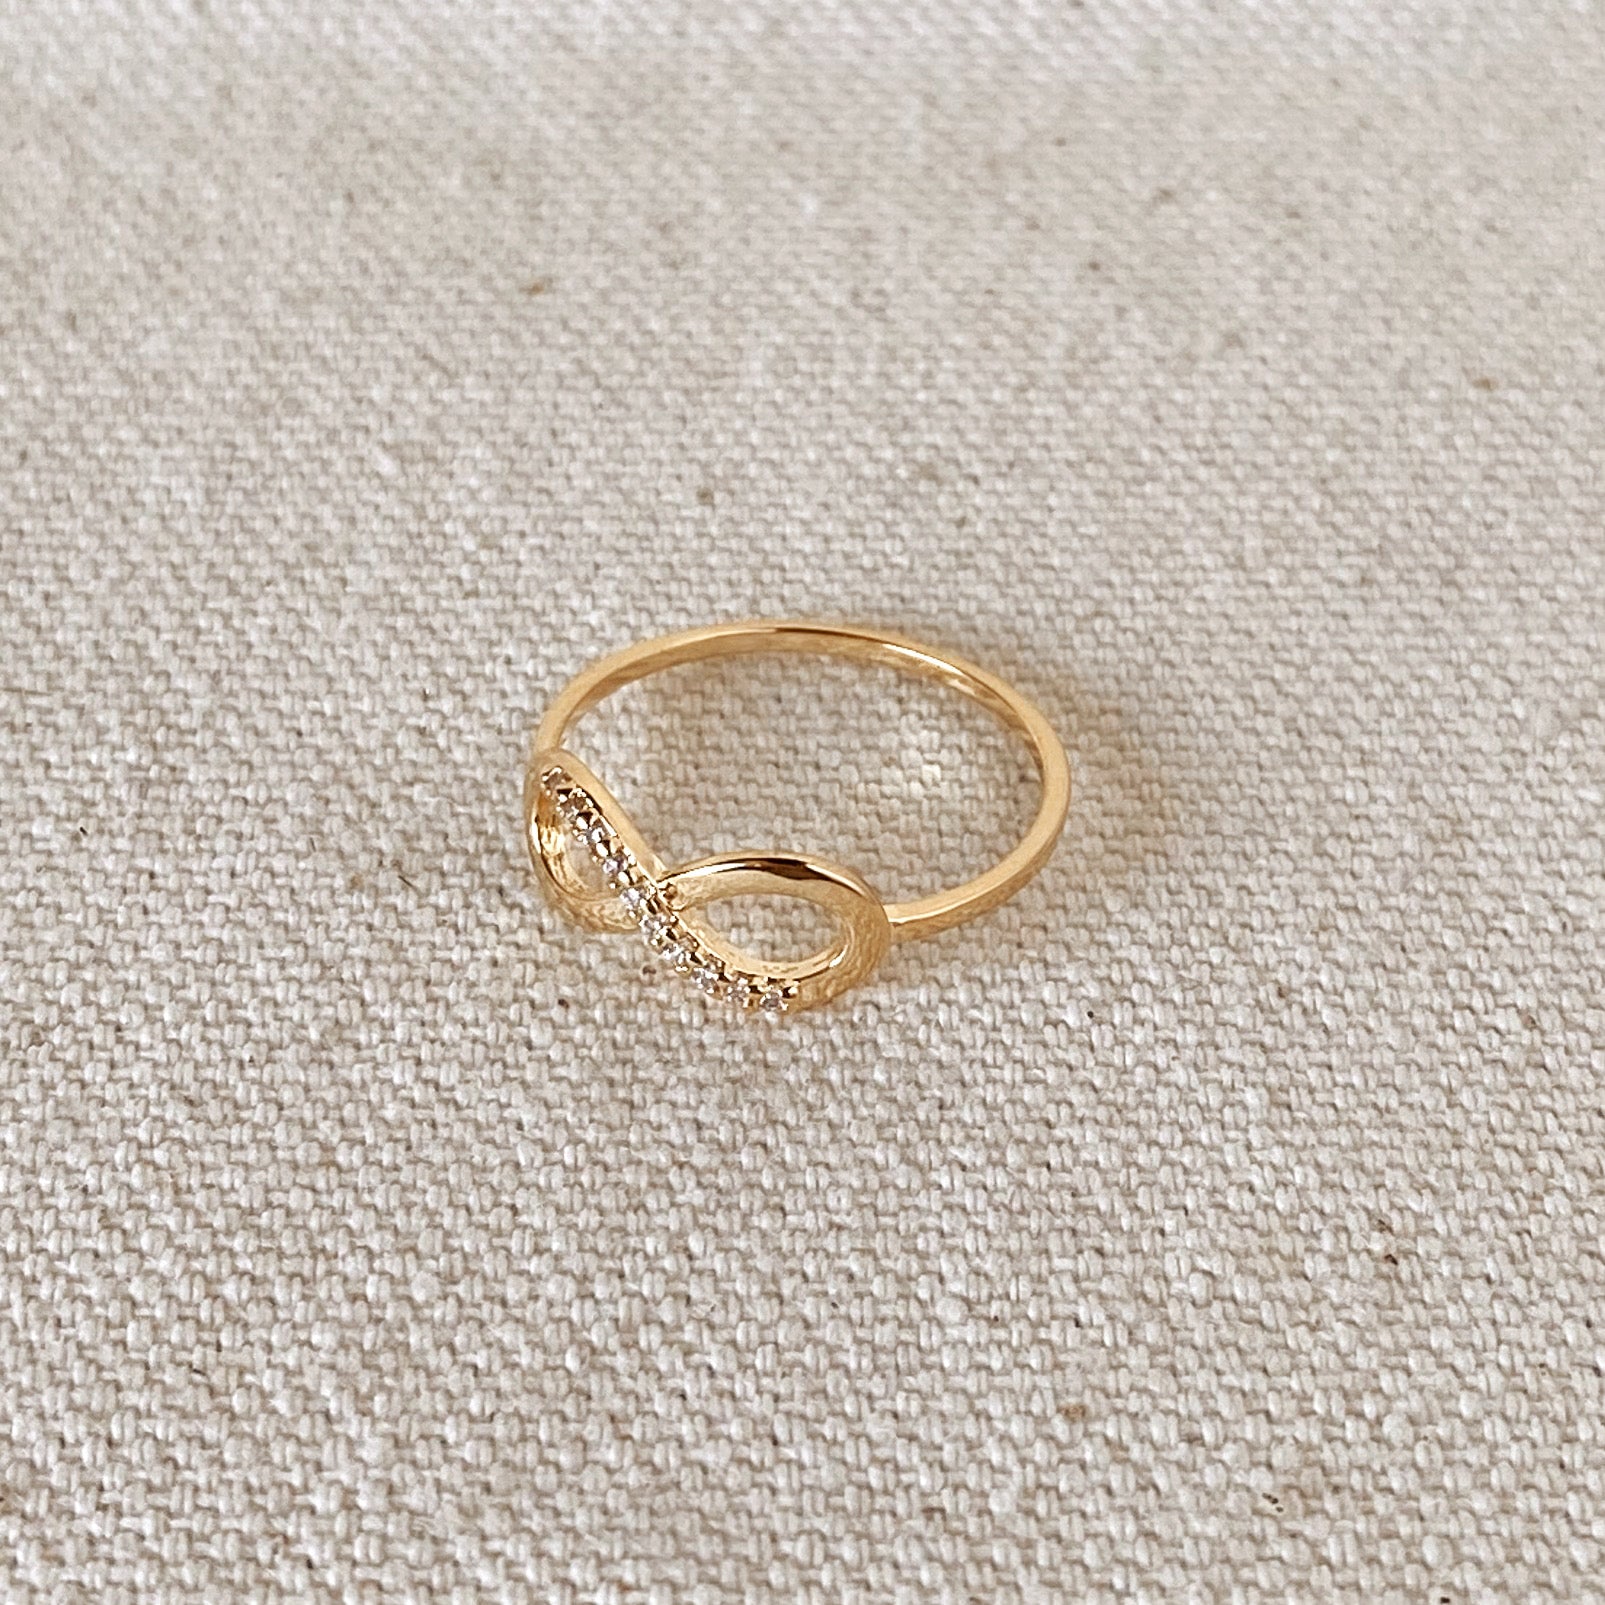 GoldFi 18k Gold Filled Infinity Dainty Ring